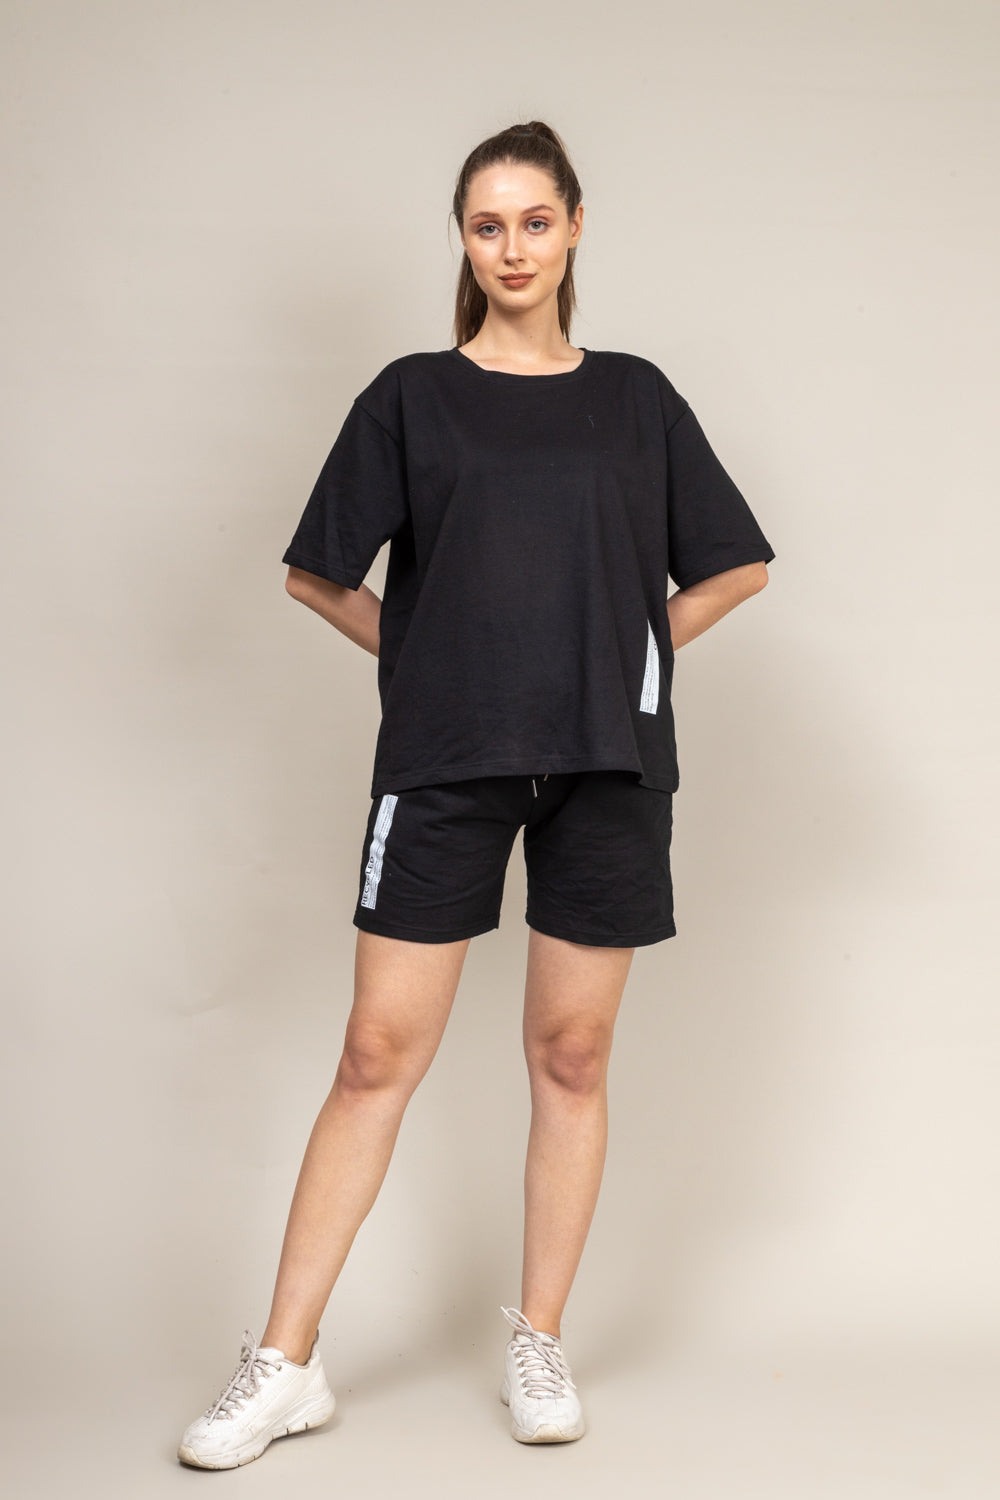 Midnight Black Oversized T-shirt Shorts Co-Ord